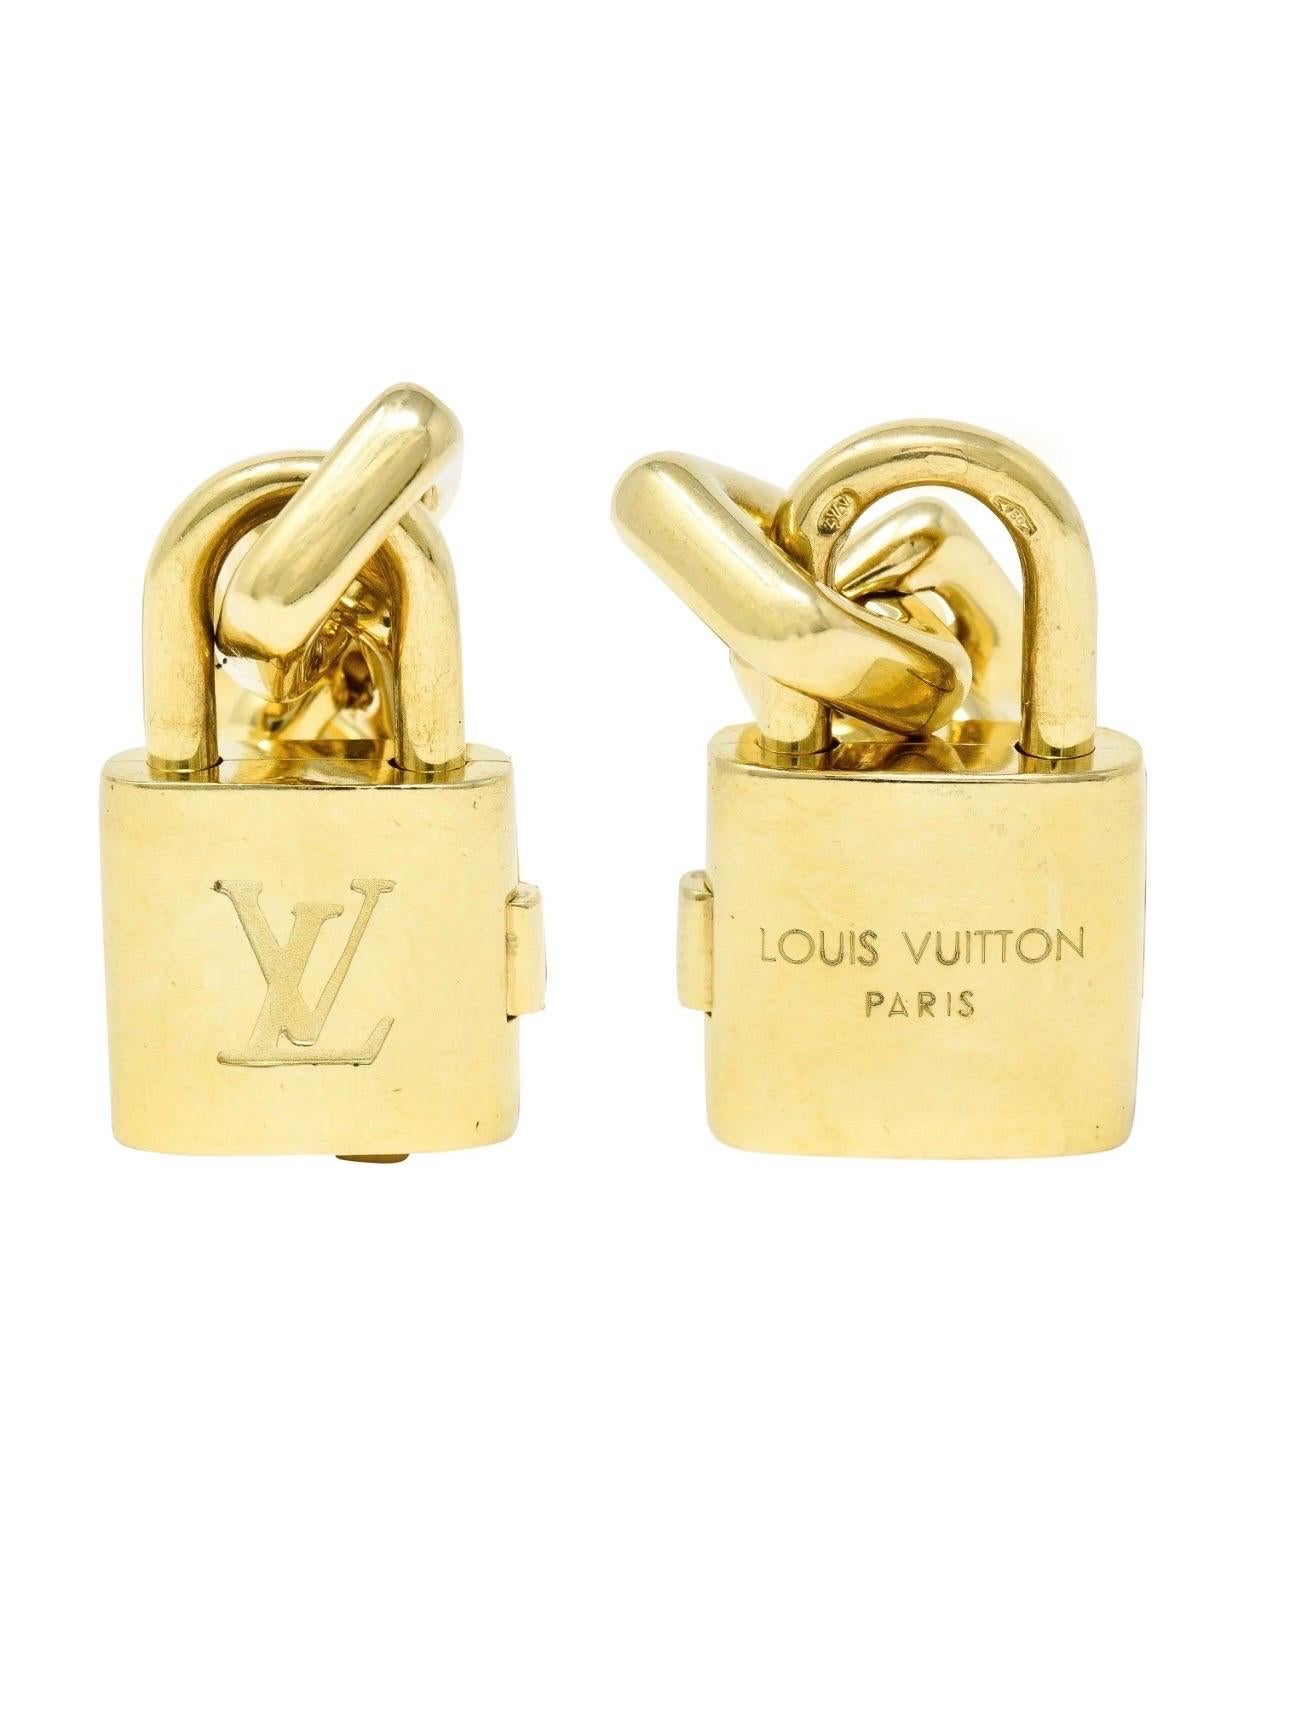 Louis Vuitton Padlock & Keys+ Two Bags Charm Bracelet en or jaune 125.7 Gm 18 KG en vente 3